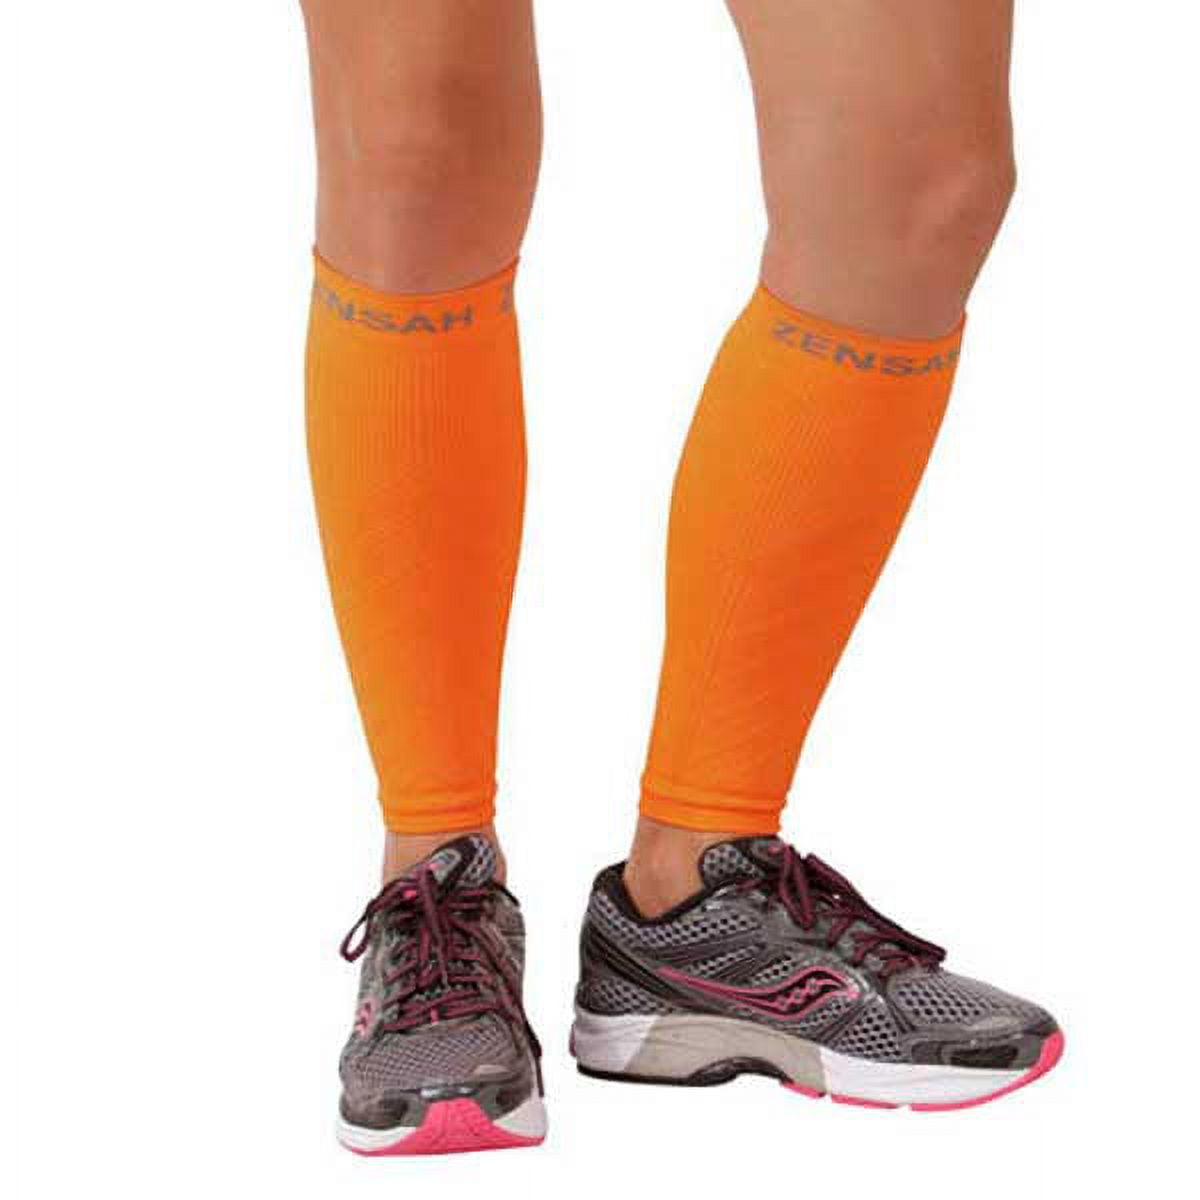 Zensah Compression Leg Sleeves-Neon Orange Small/Medium 